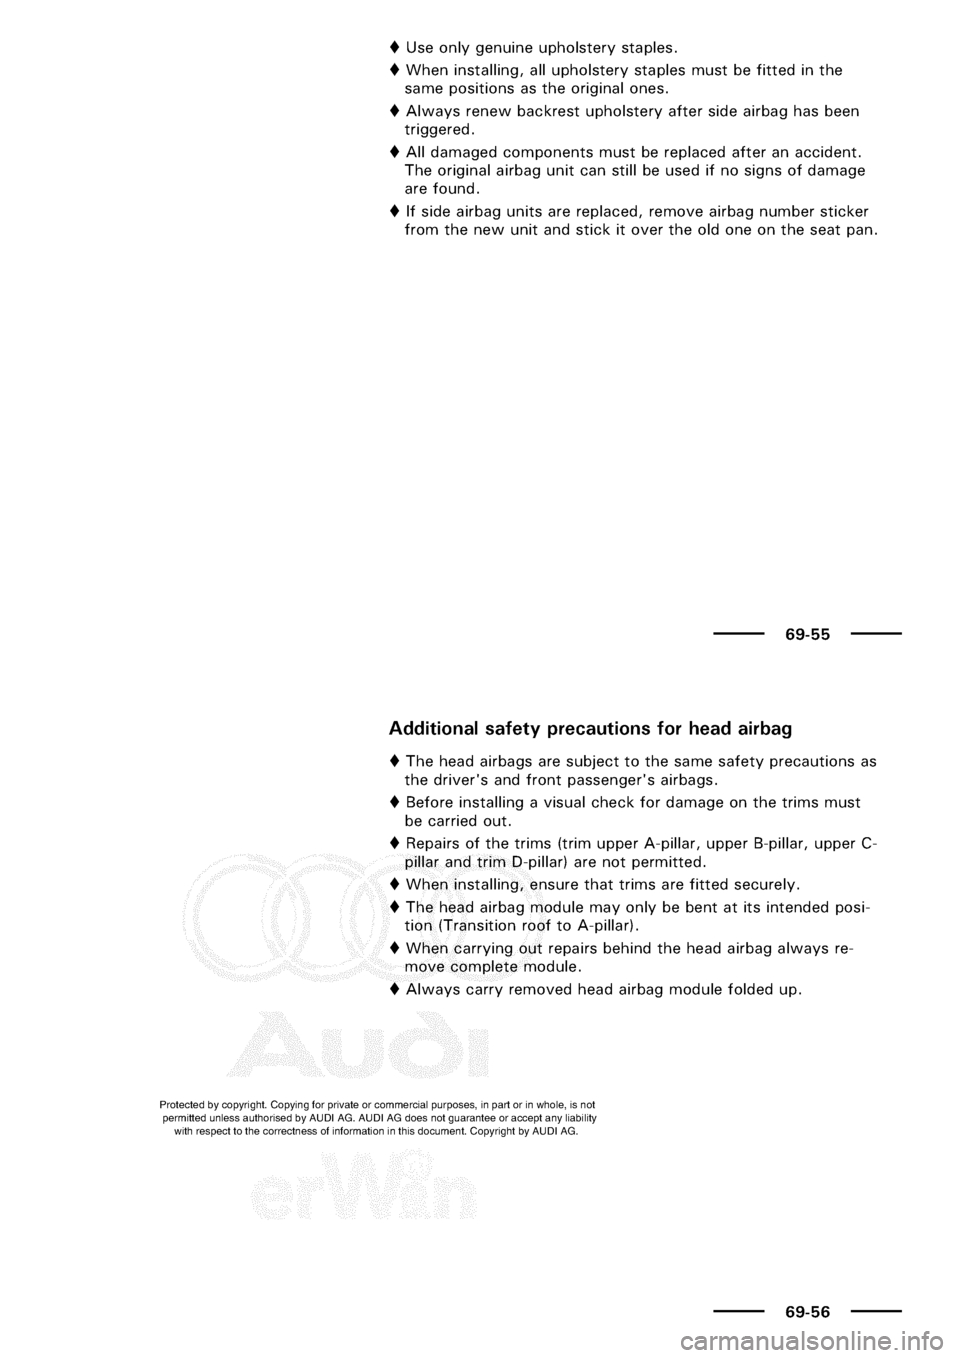 AUDI A3 2000 8L / 1.G General Body Assembly Interior Repair Manual 